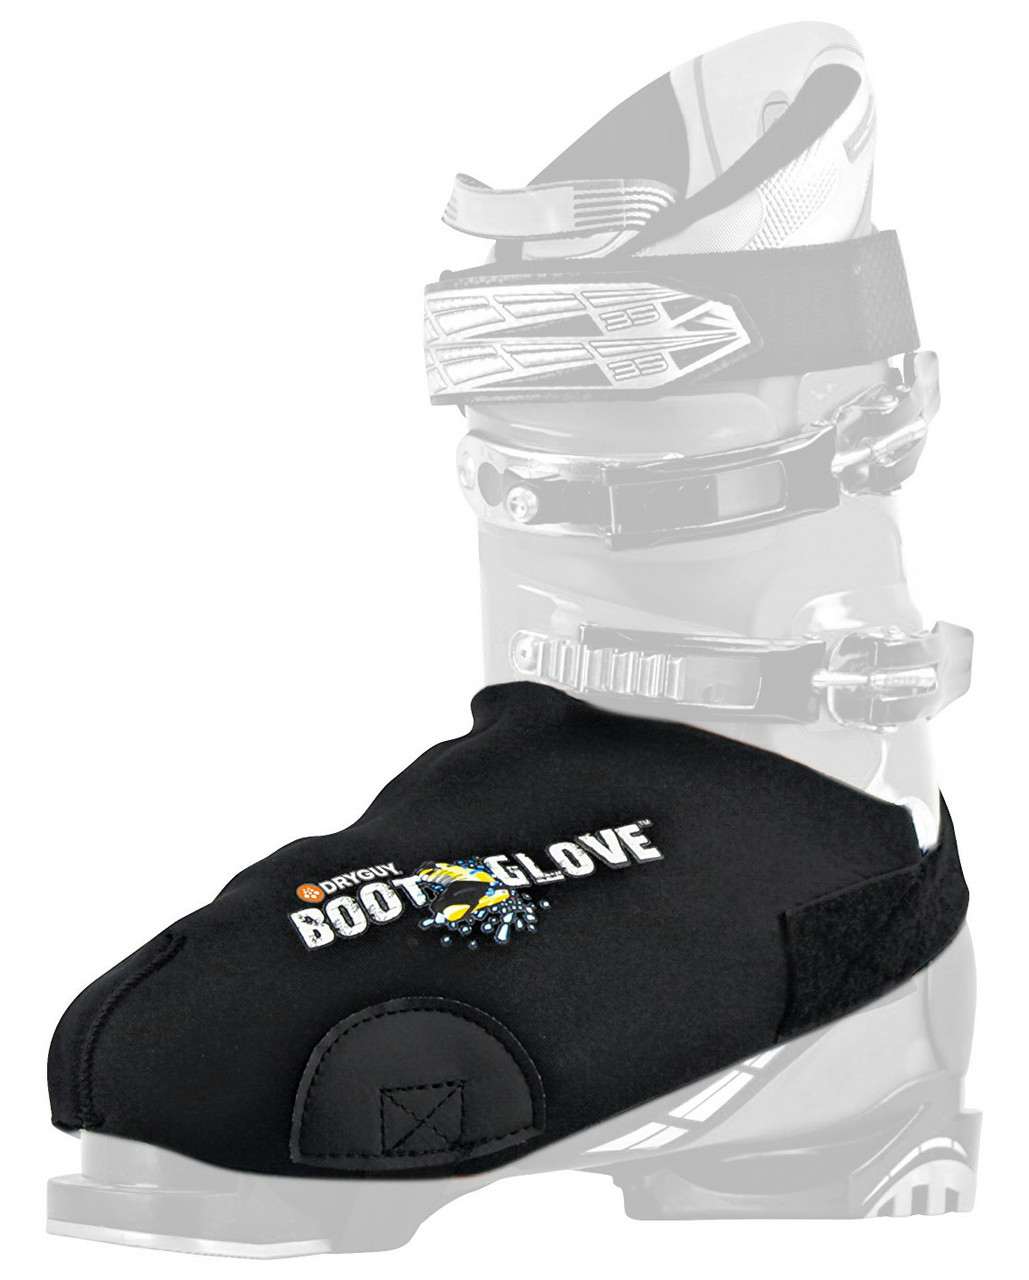 Couvre-bottes BootGlove Noir